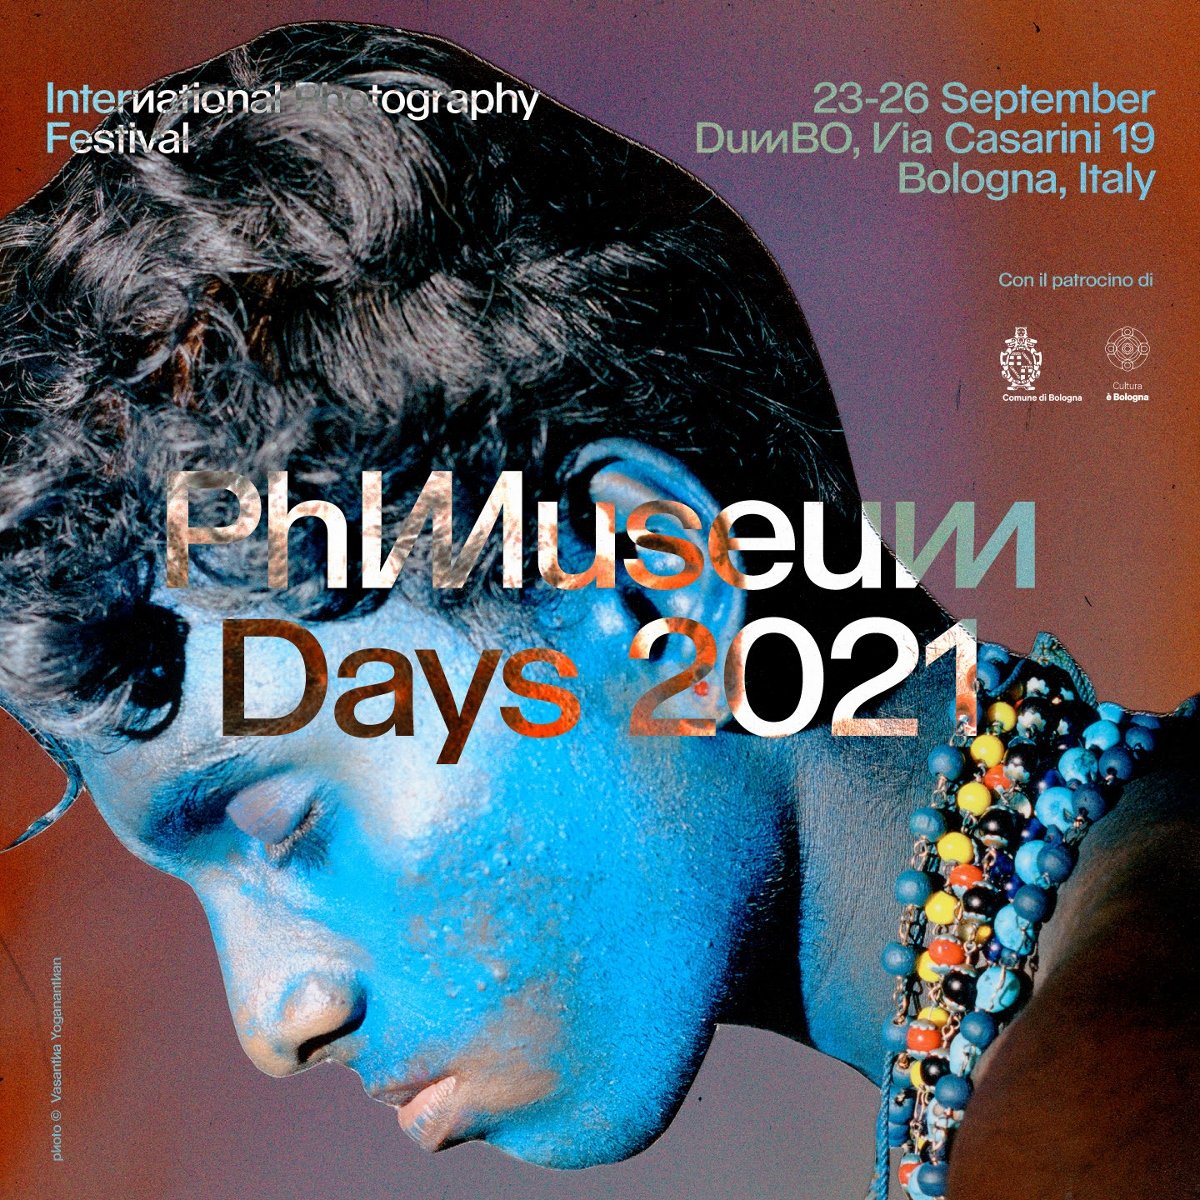 PhMuseum Days